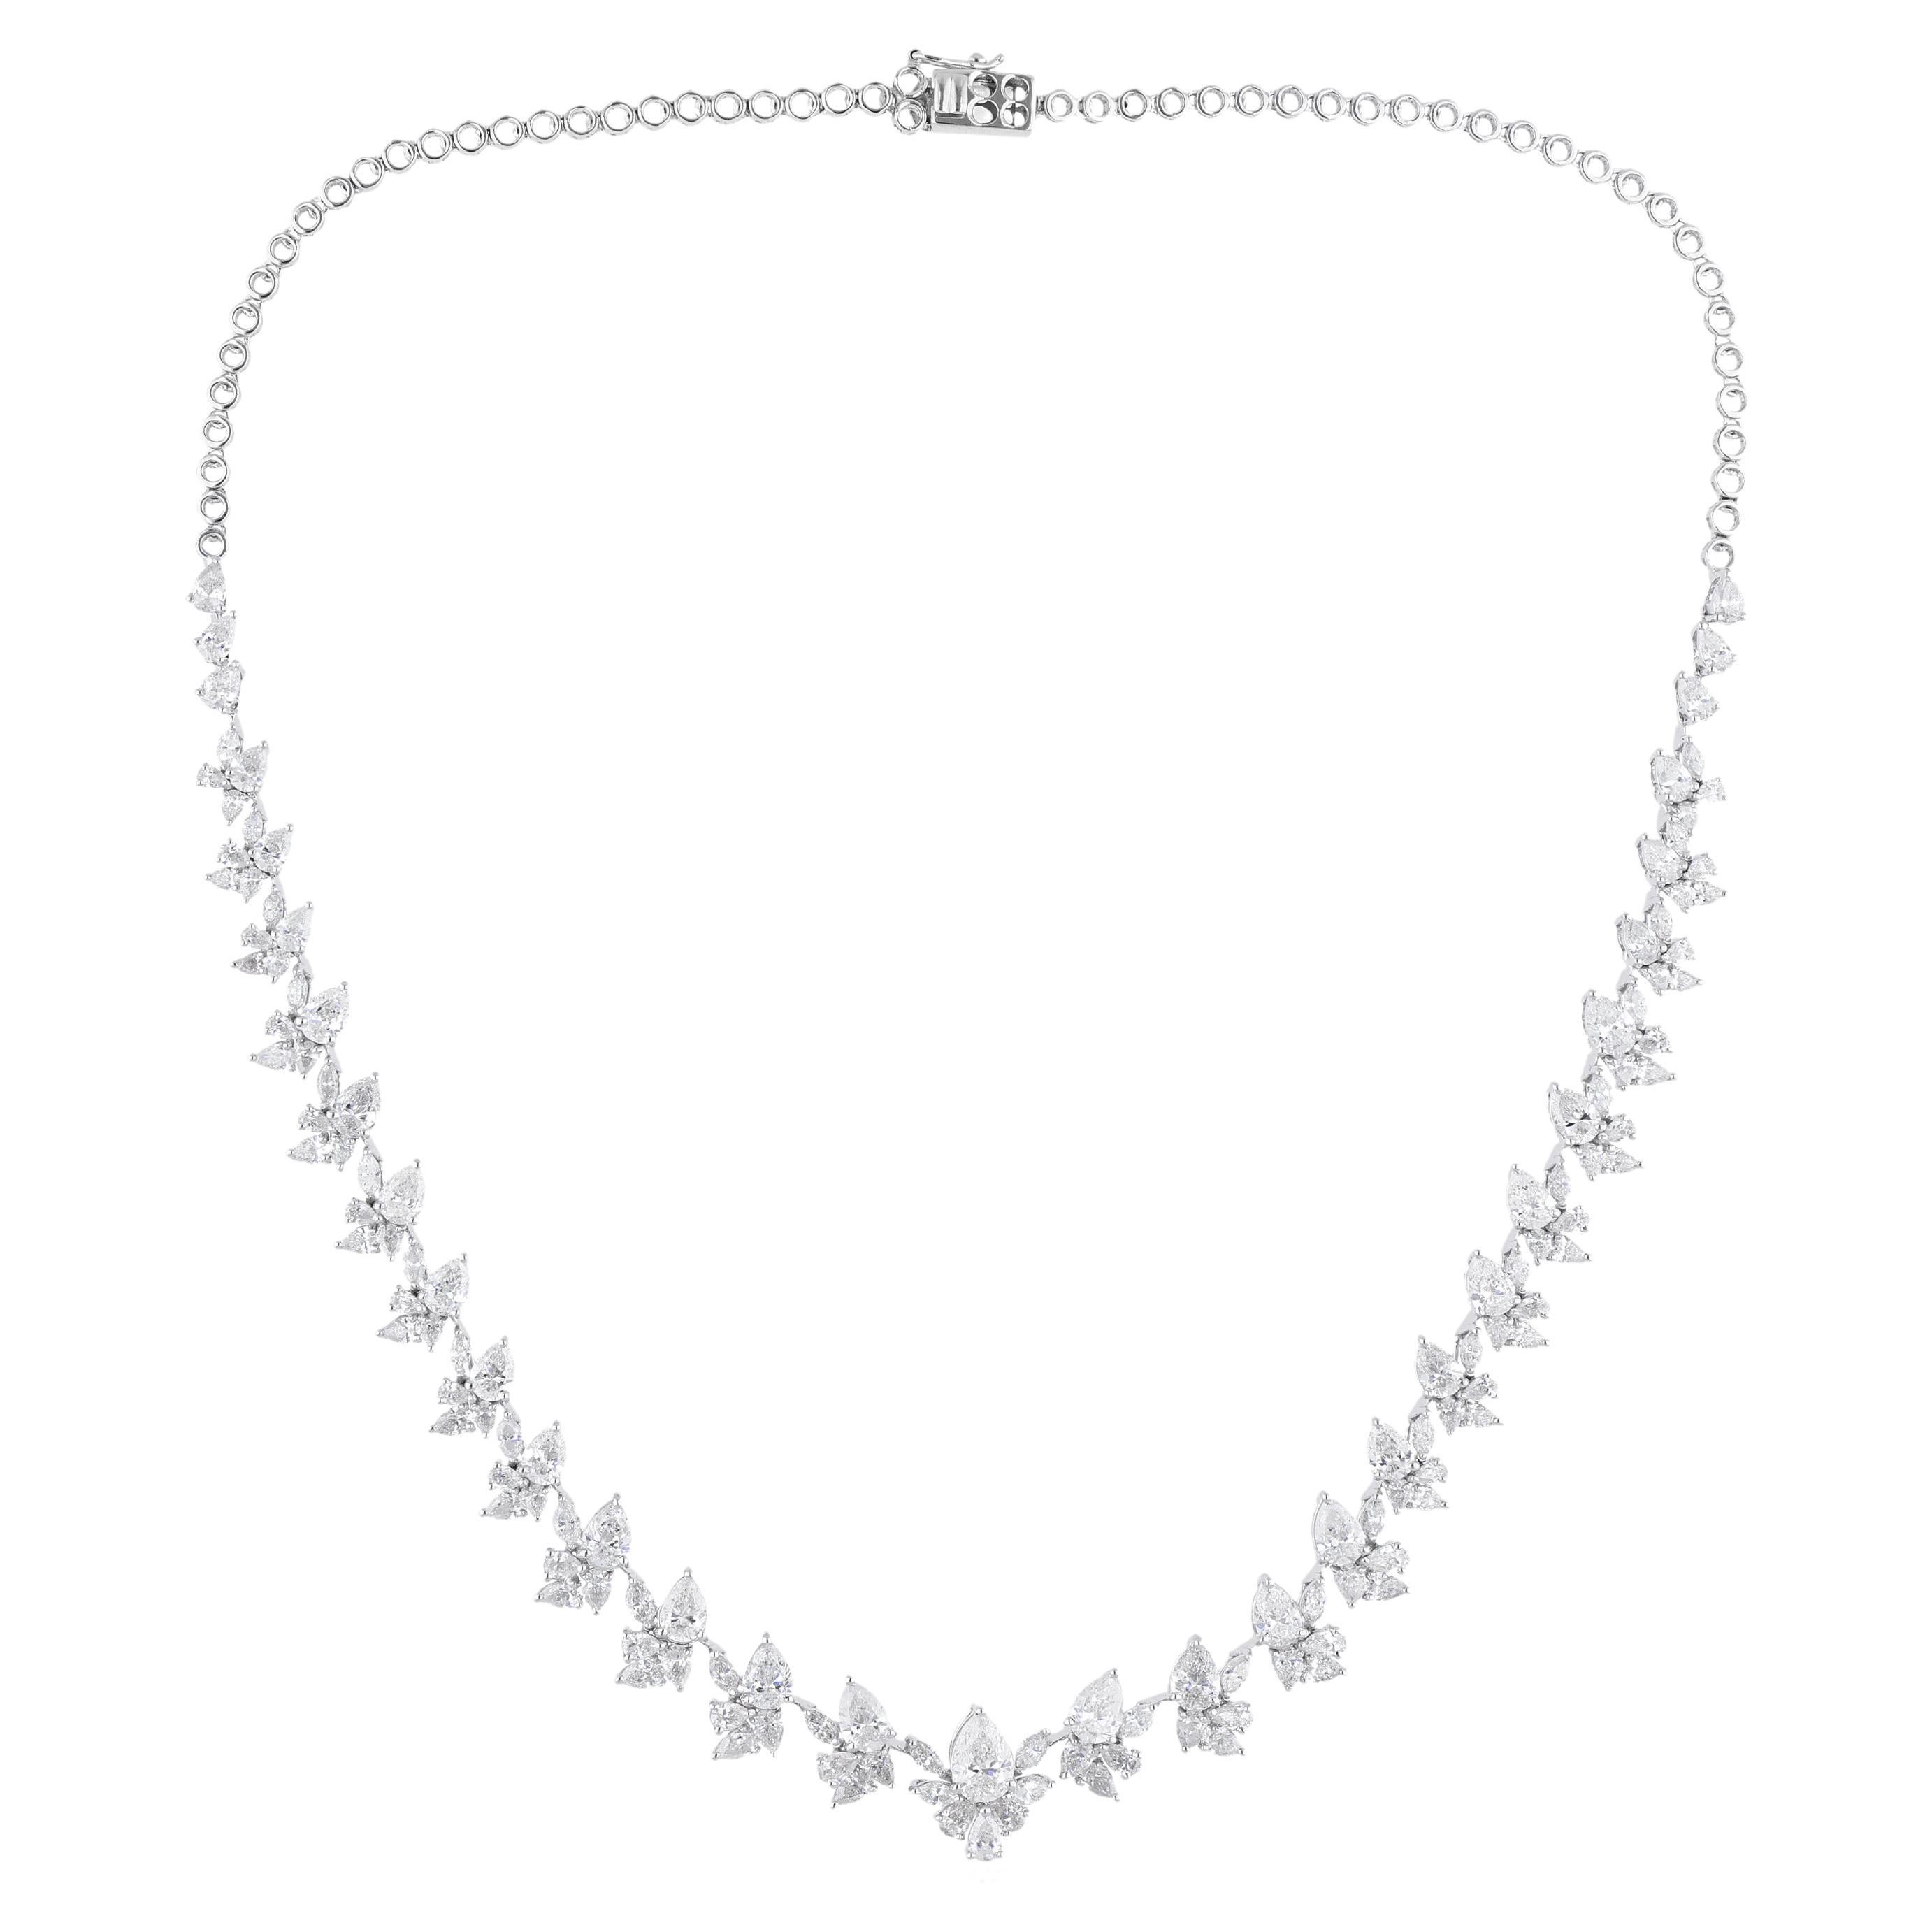 SI Clarity HI Color Pear Diamond Charm Necklace 14 Karat White Gold Fine Jewelry